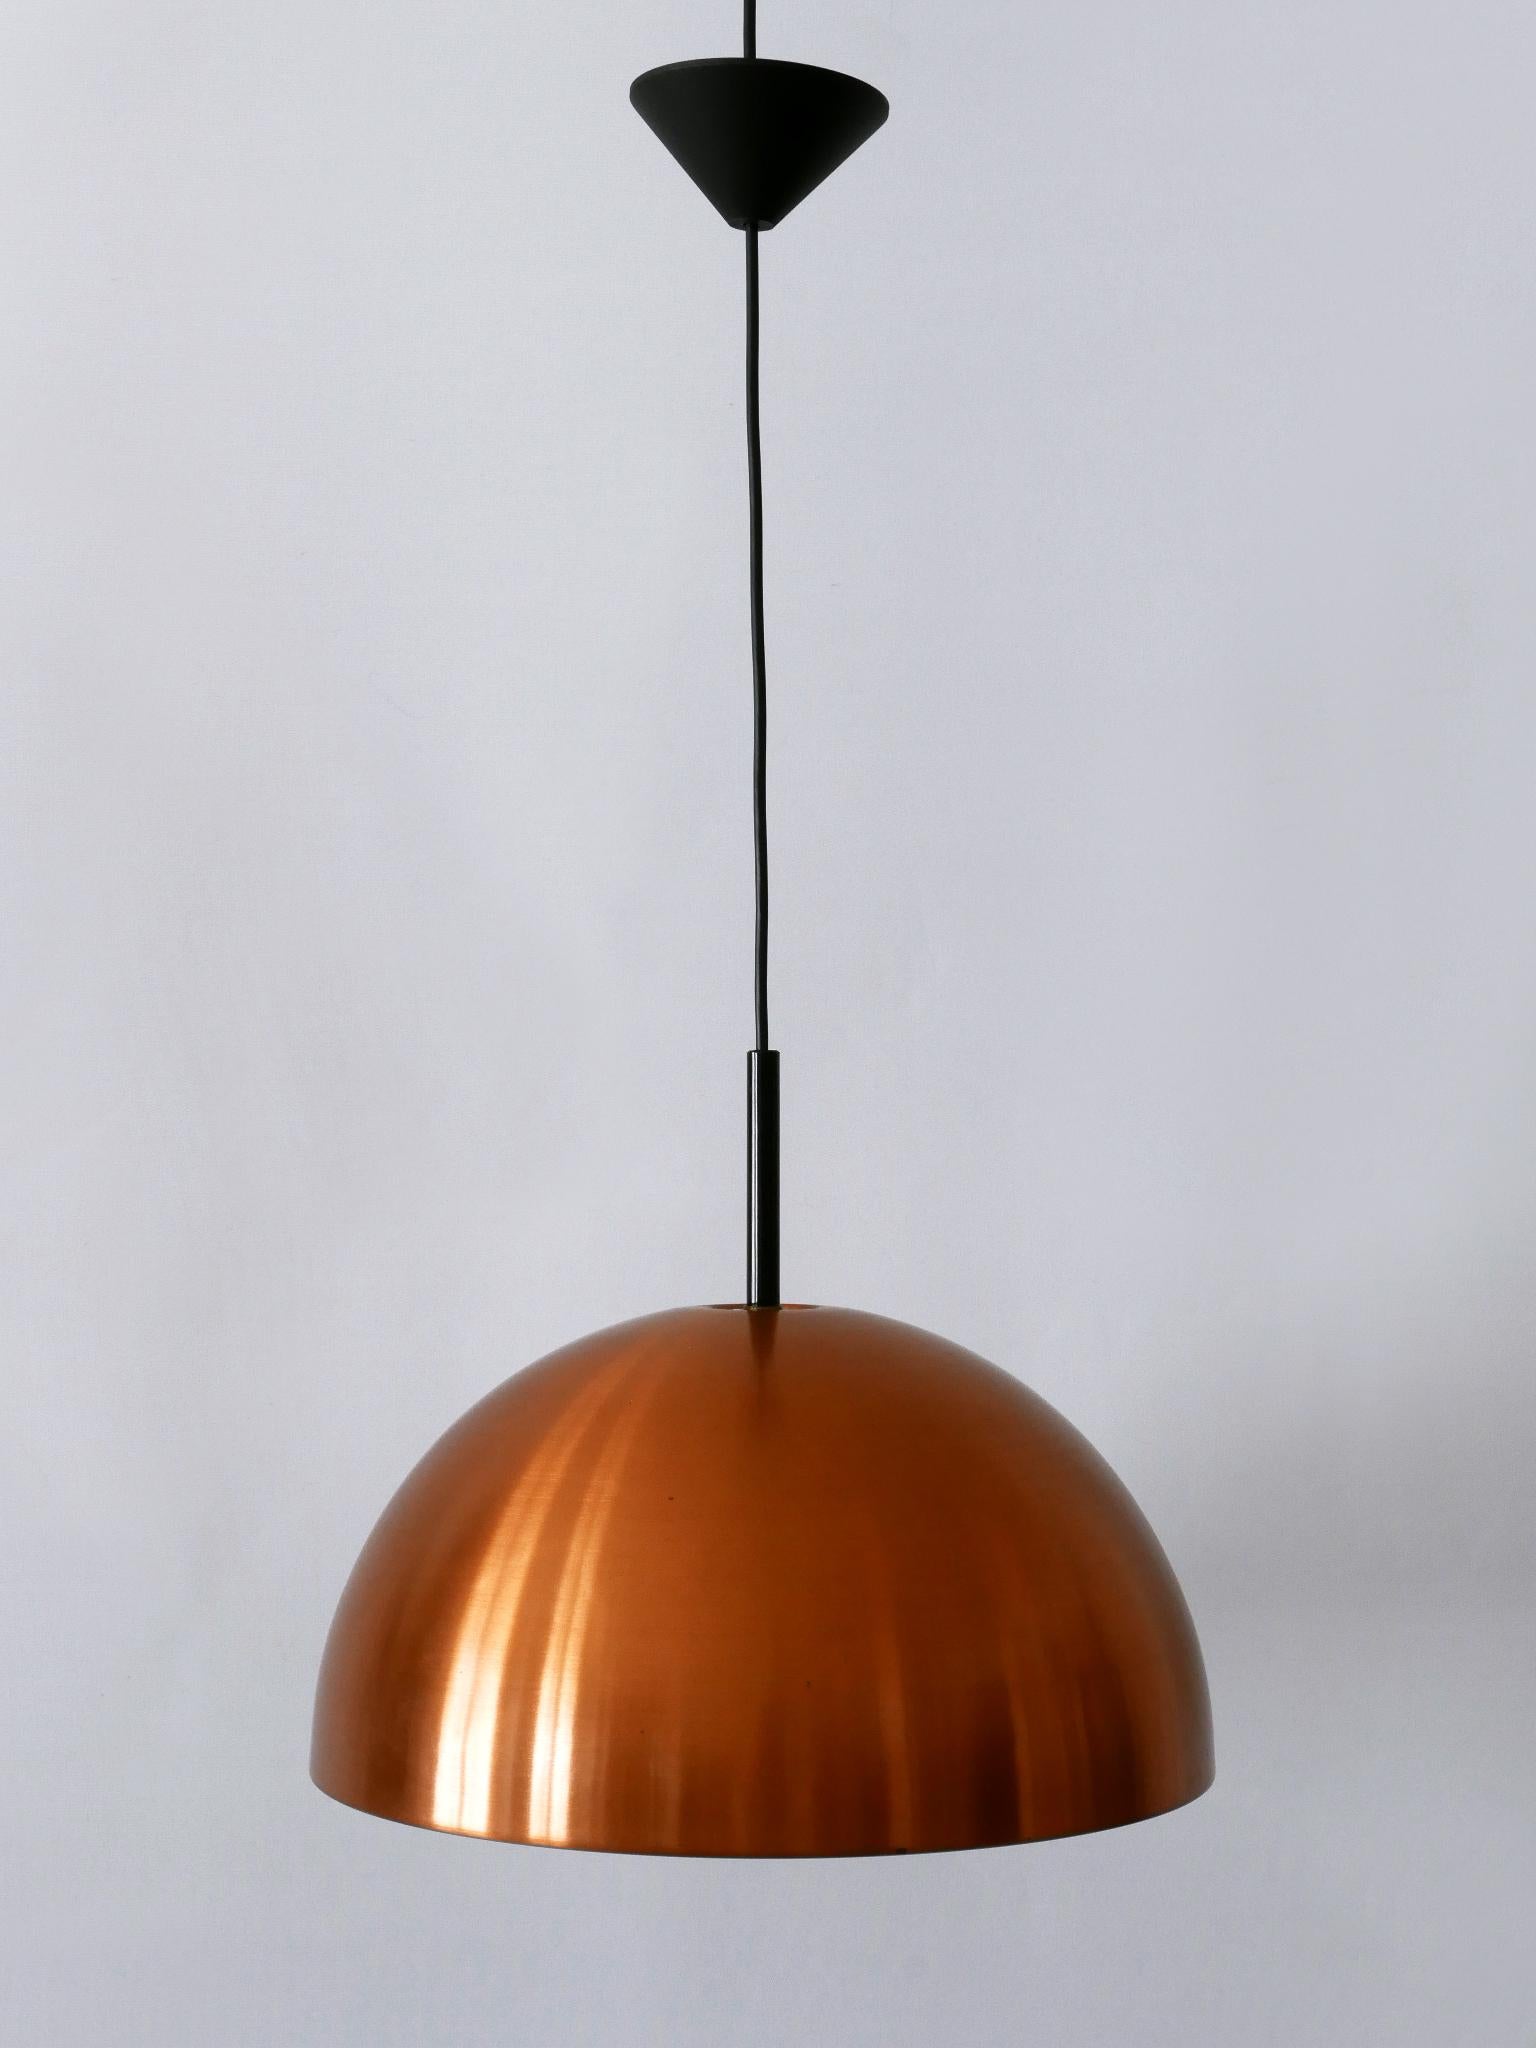 Elegant Mid-Century Modern Copper Pendant Lamp by Staff & Schwarz Germany 1960s For Sale 7